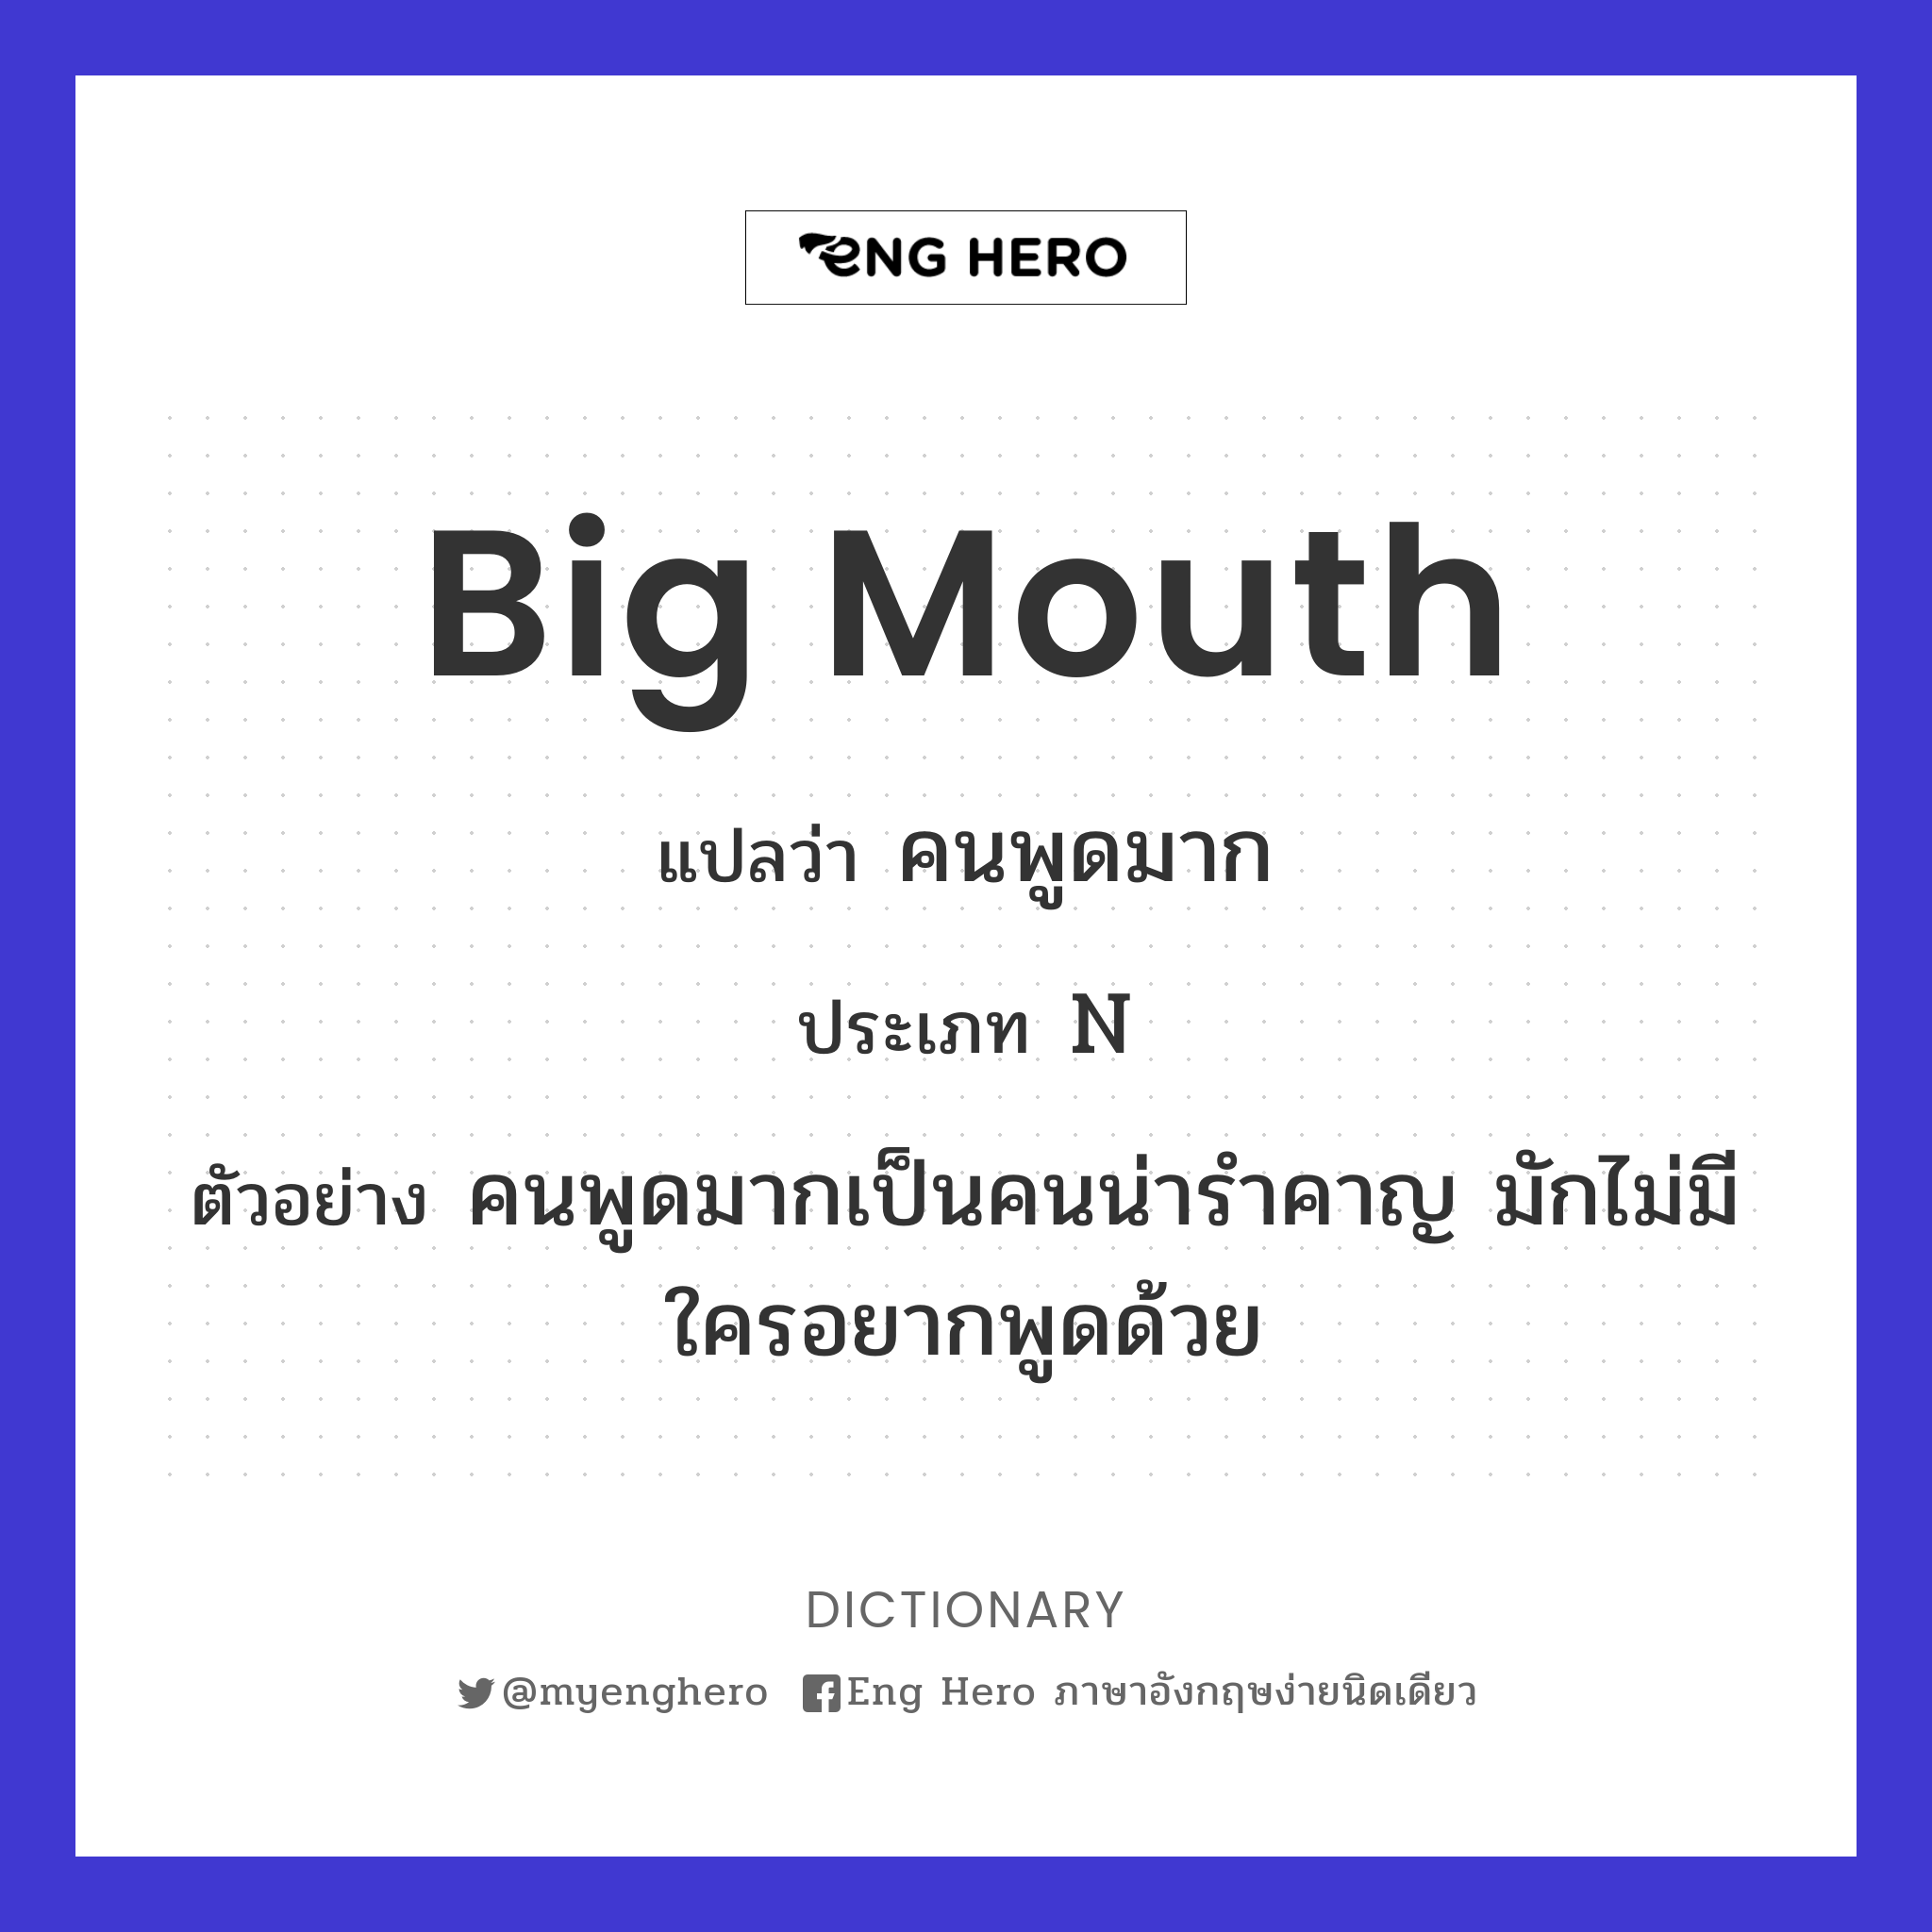 big mouth